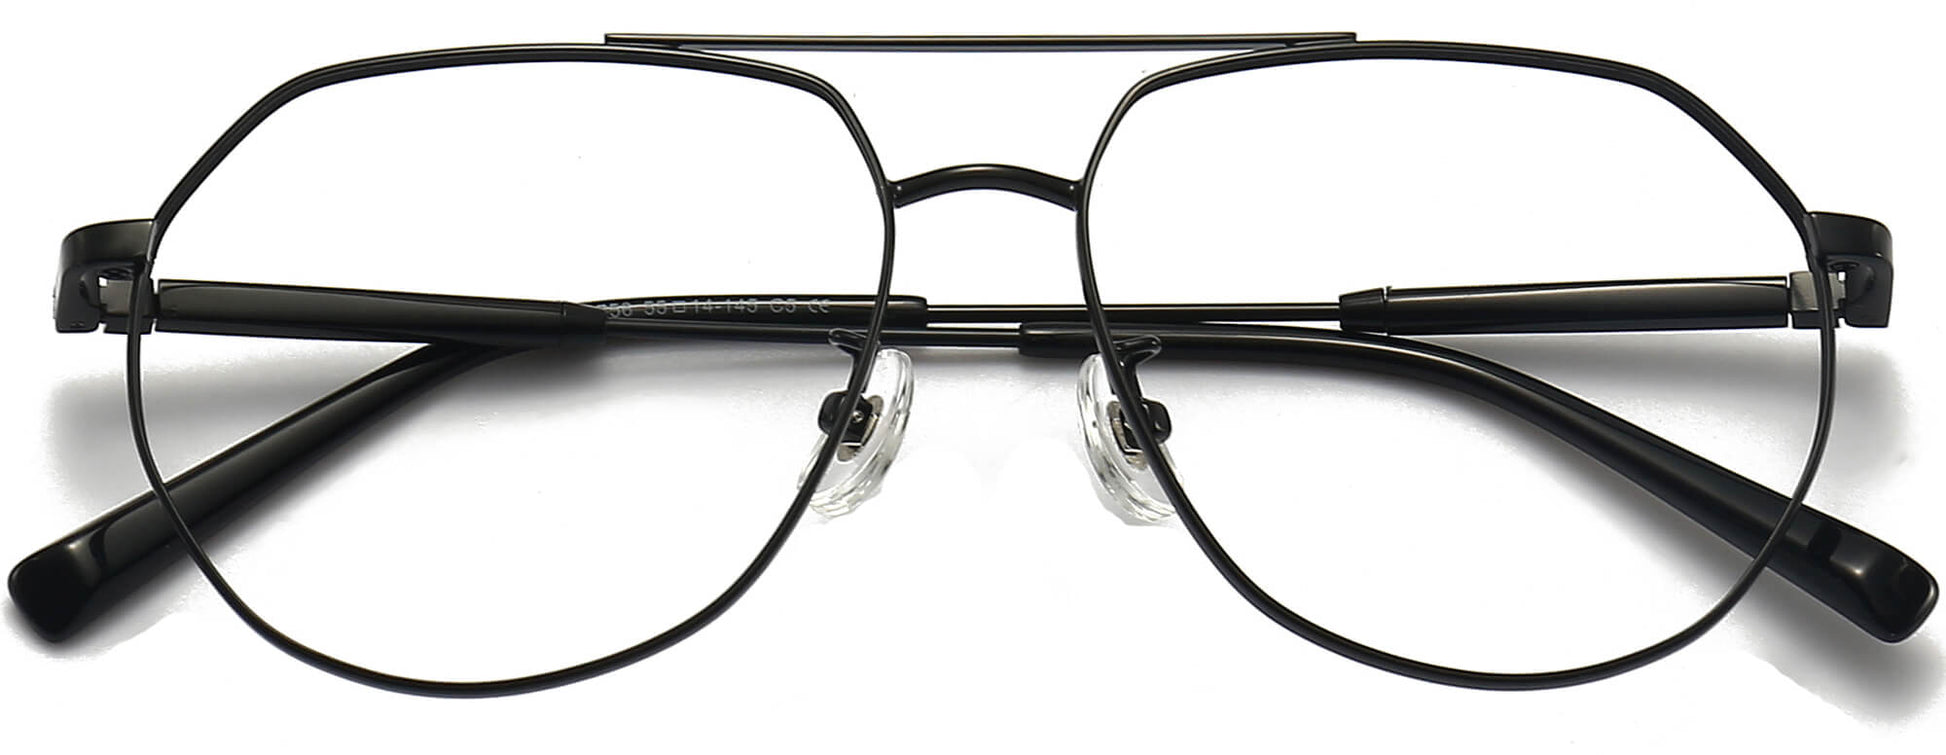 Baker Aviator Black Eyeglasses from ANRRI, closed view